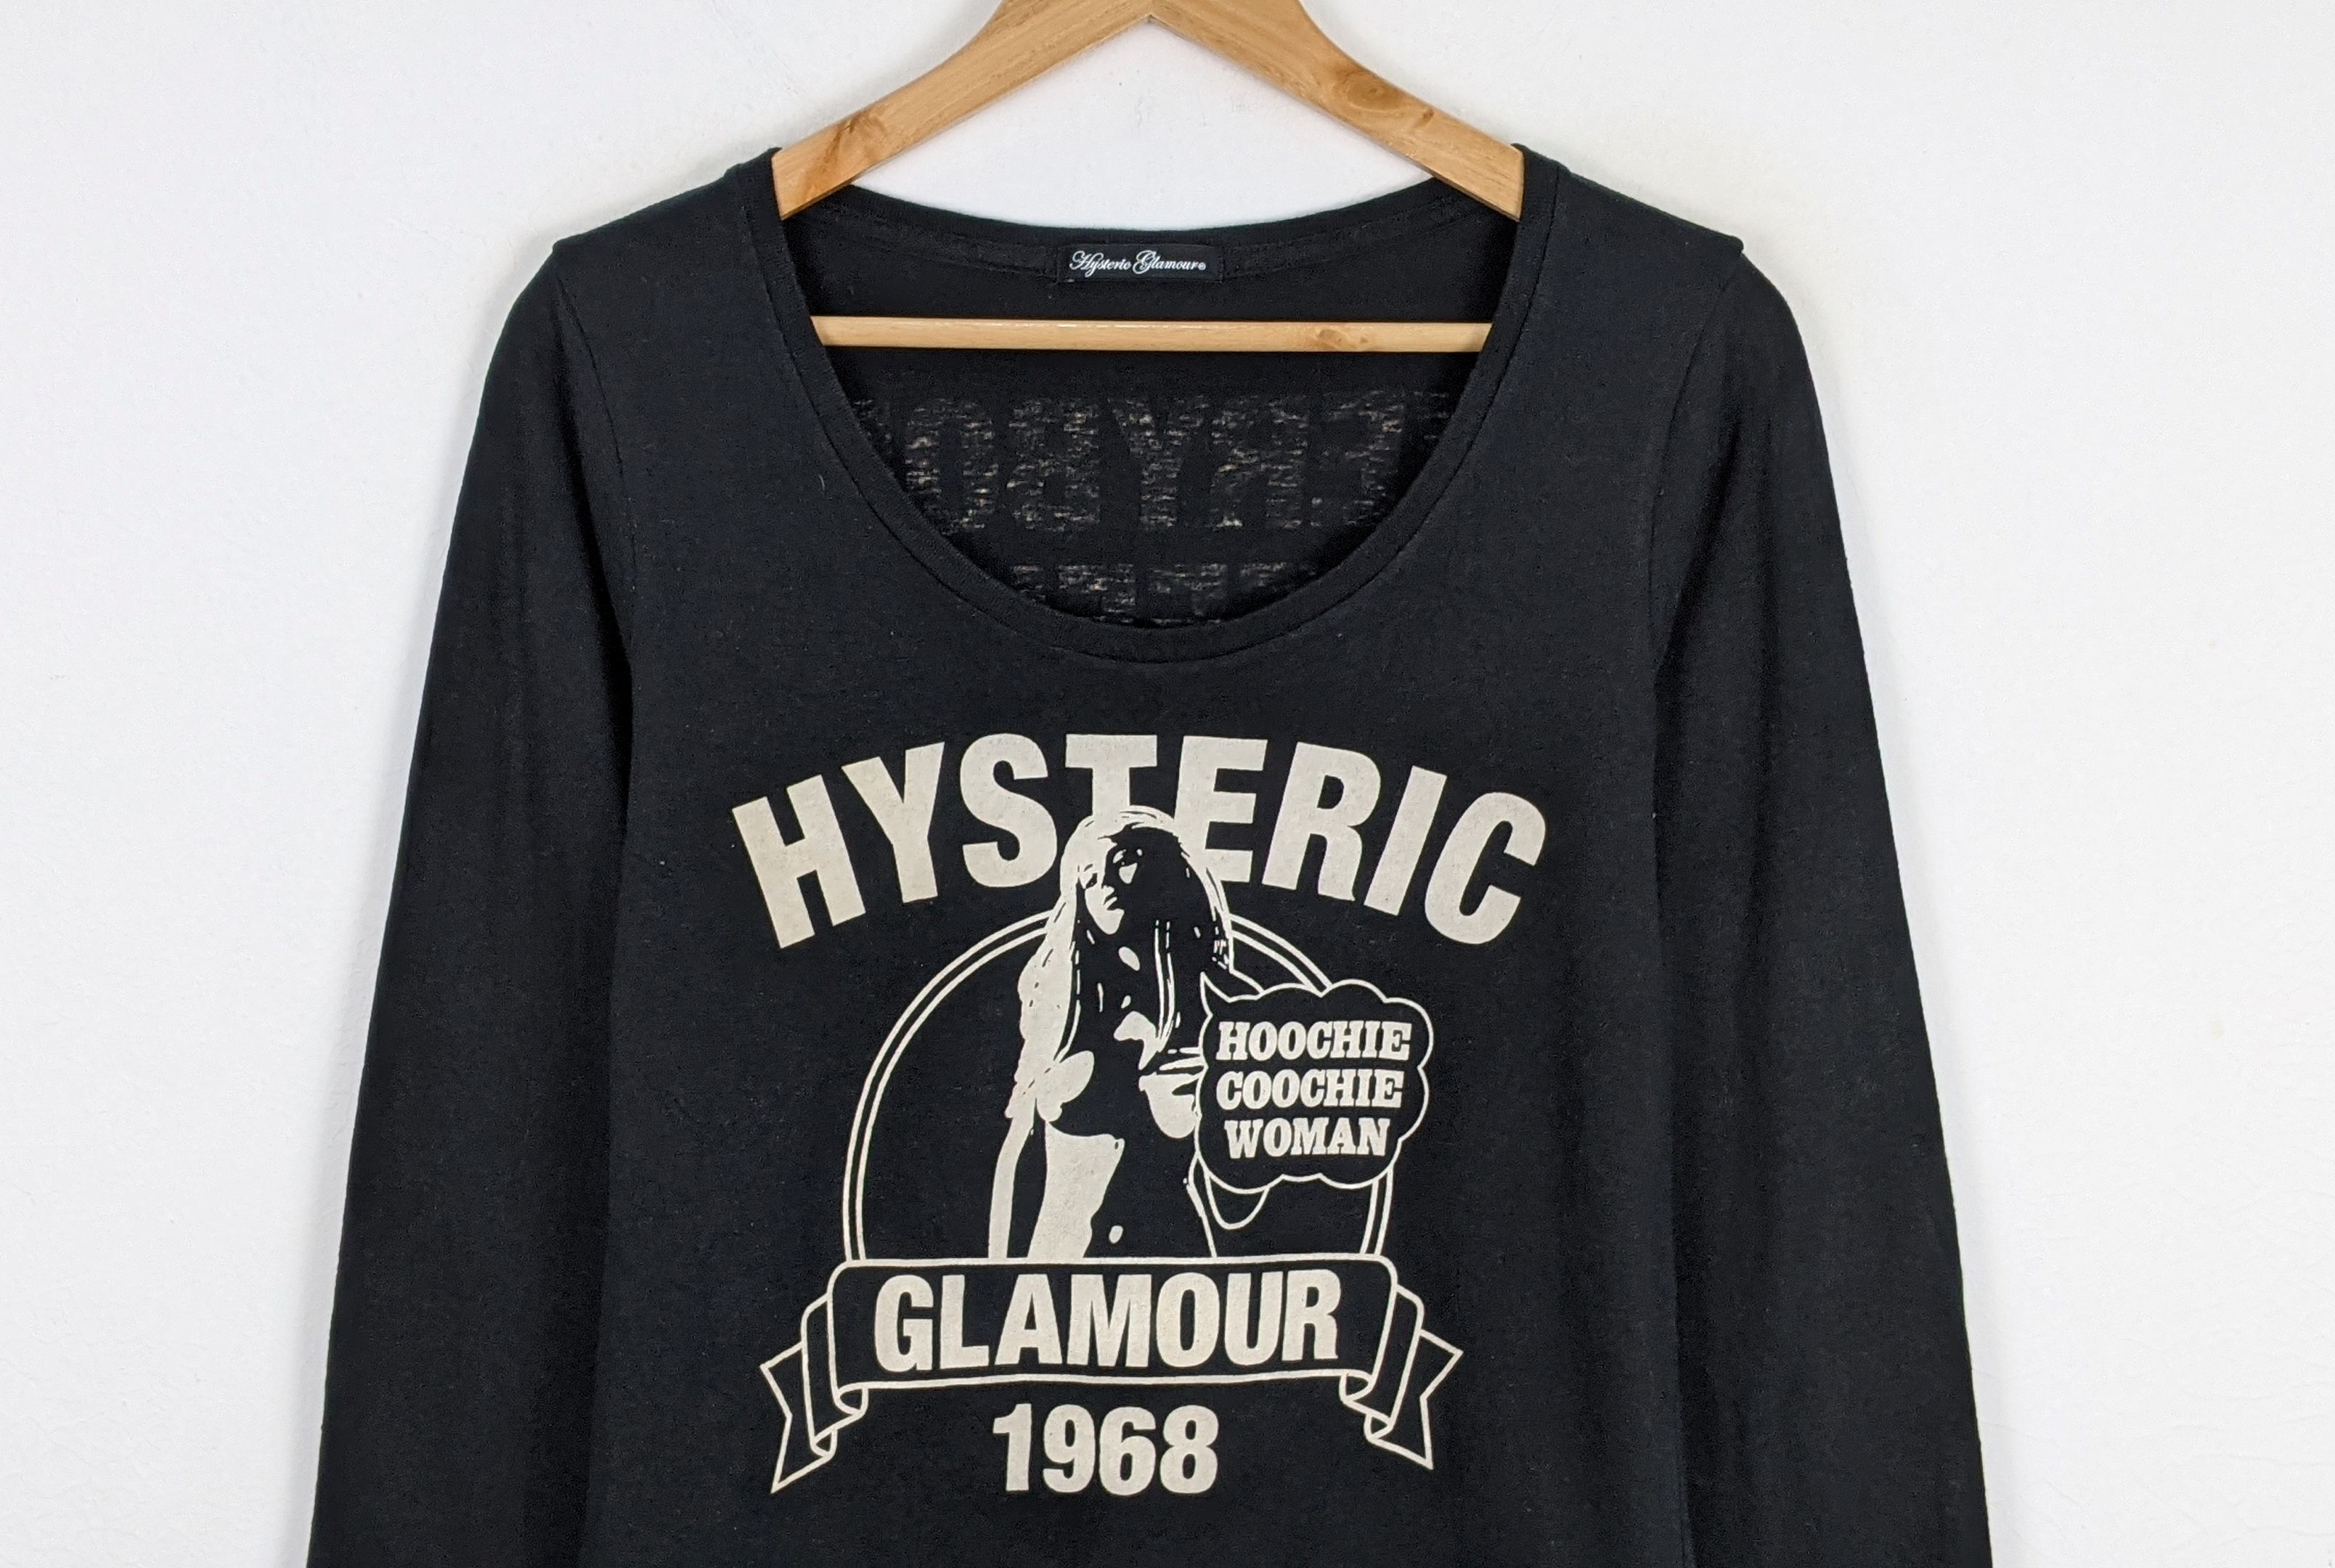 Hysteric Glamour Hoochie Coochie Woman shirt - 2